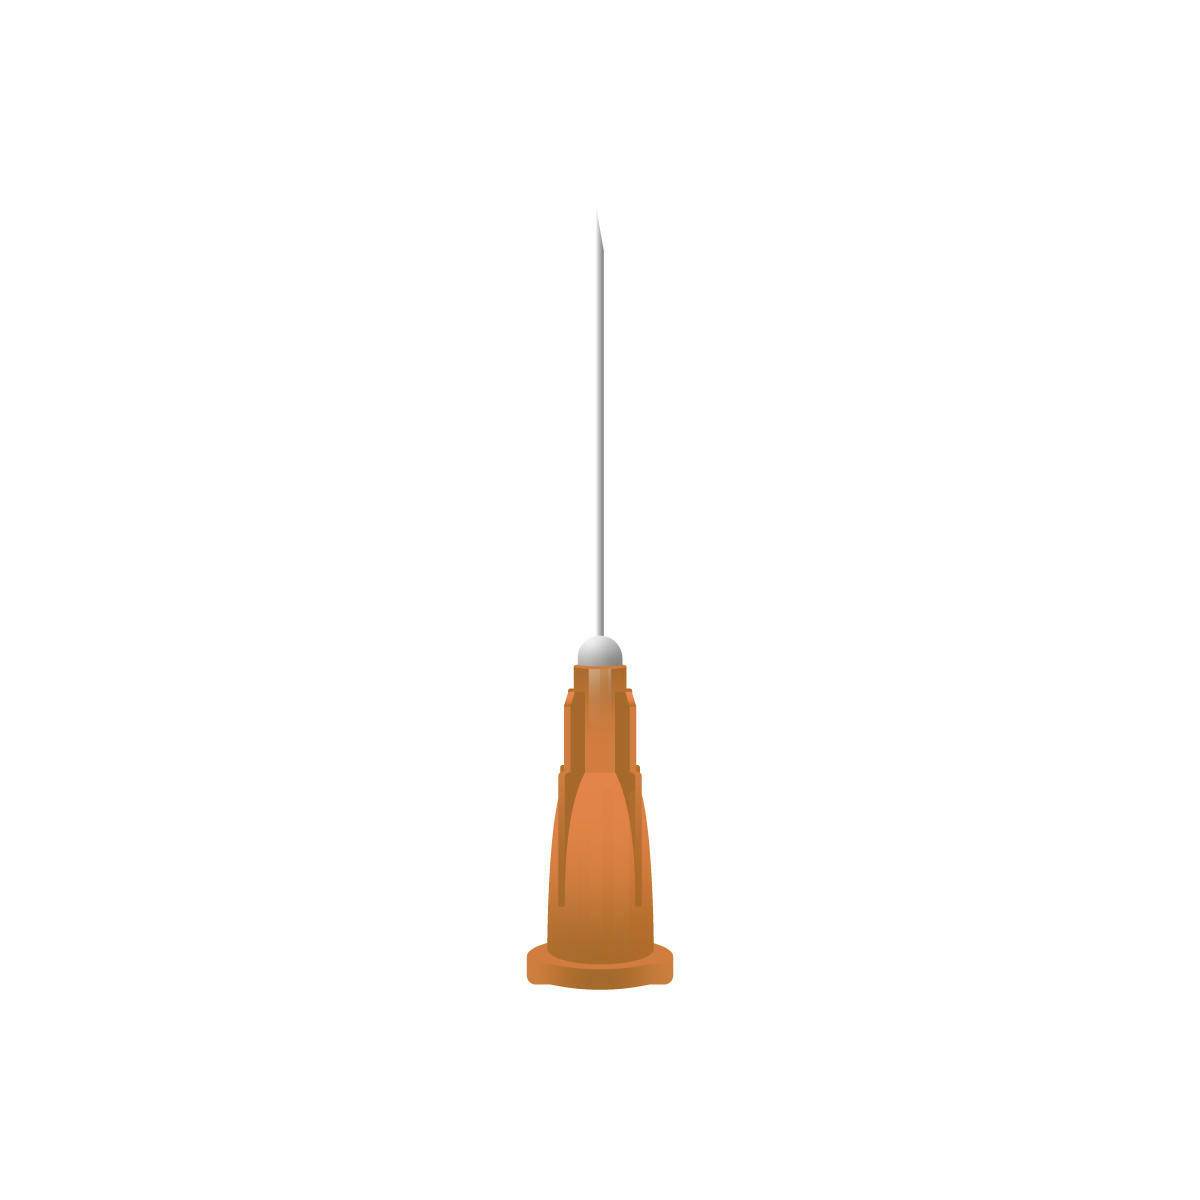 25g Orange 1 inch Terumo Needles - UKMEDI